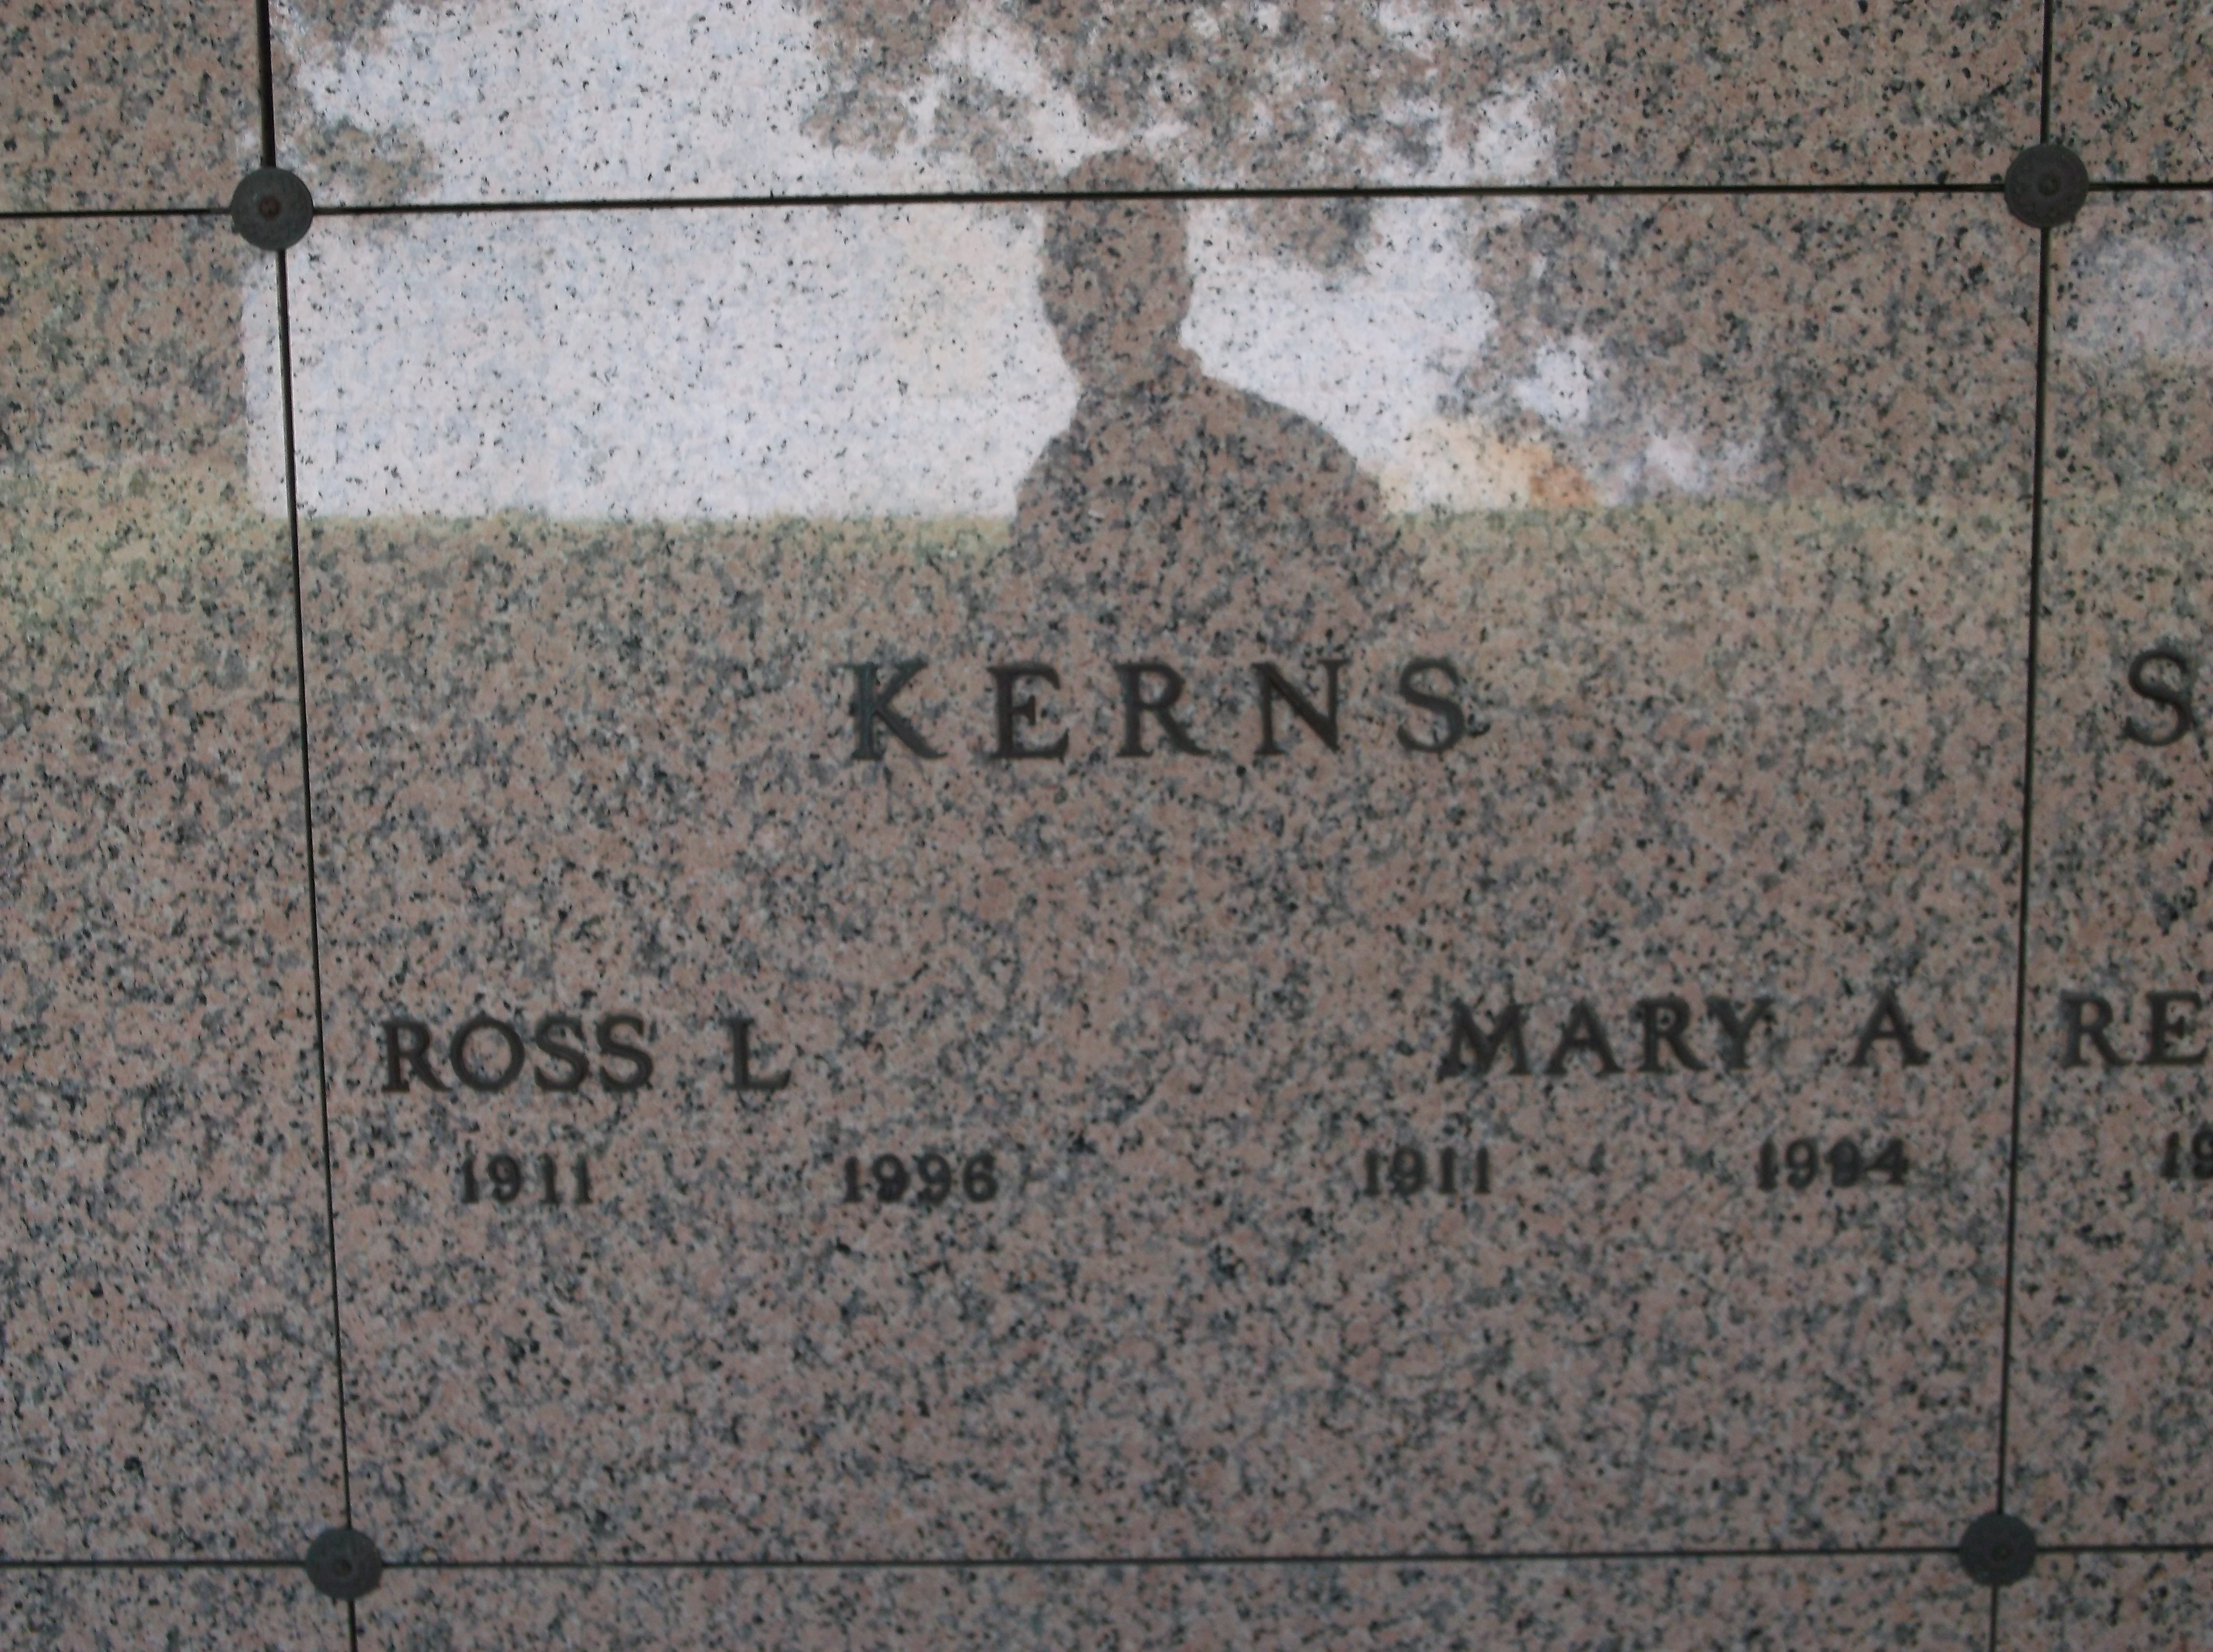 Mary A Kerns